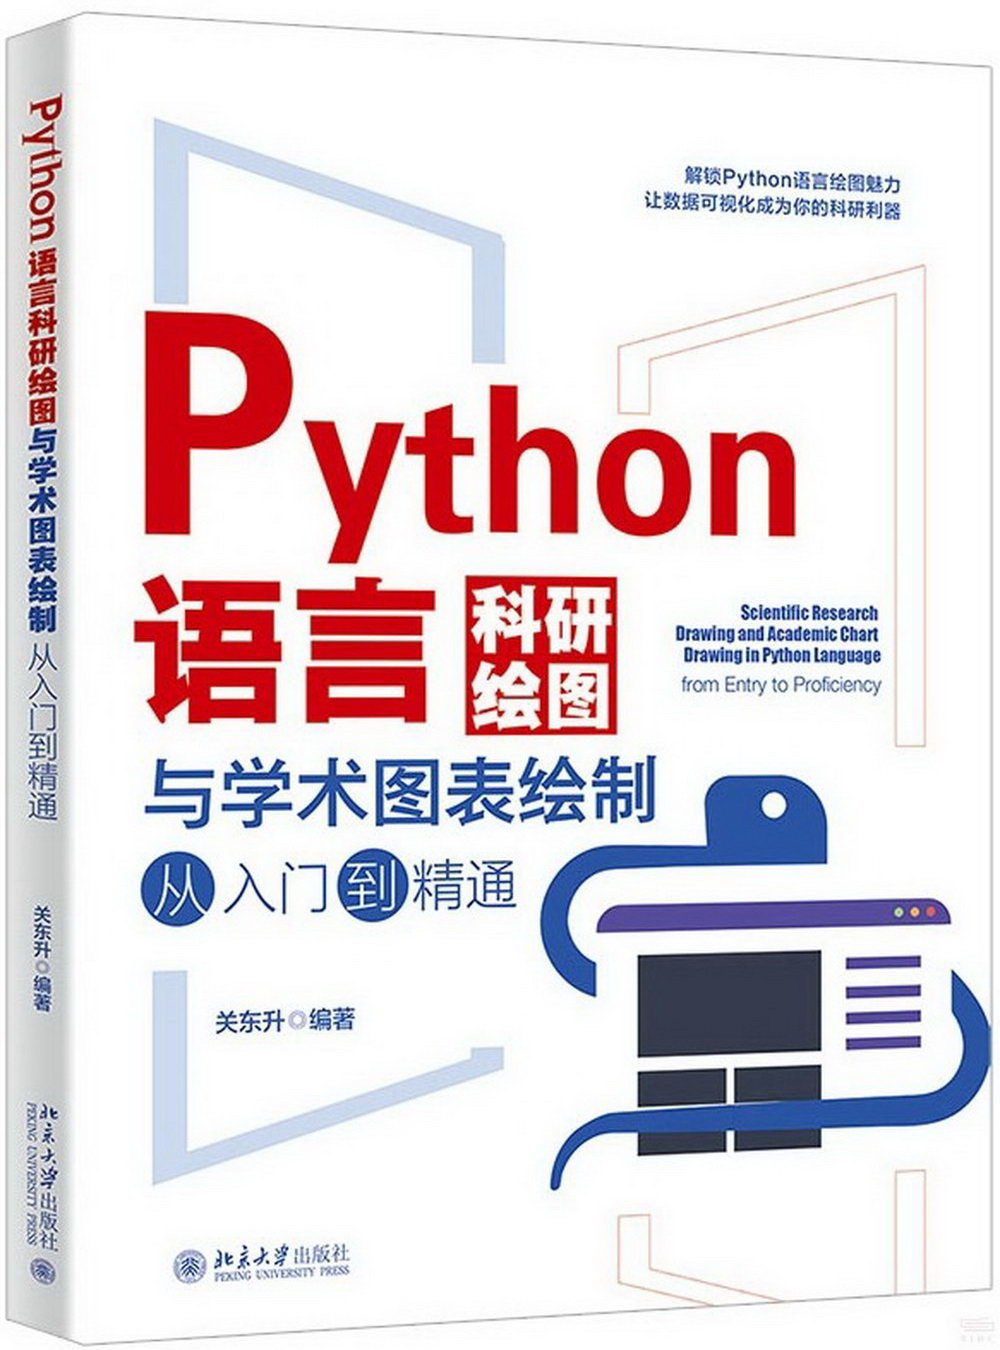 Python語言科研繪圖與學術圖表繪製從入門到精通